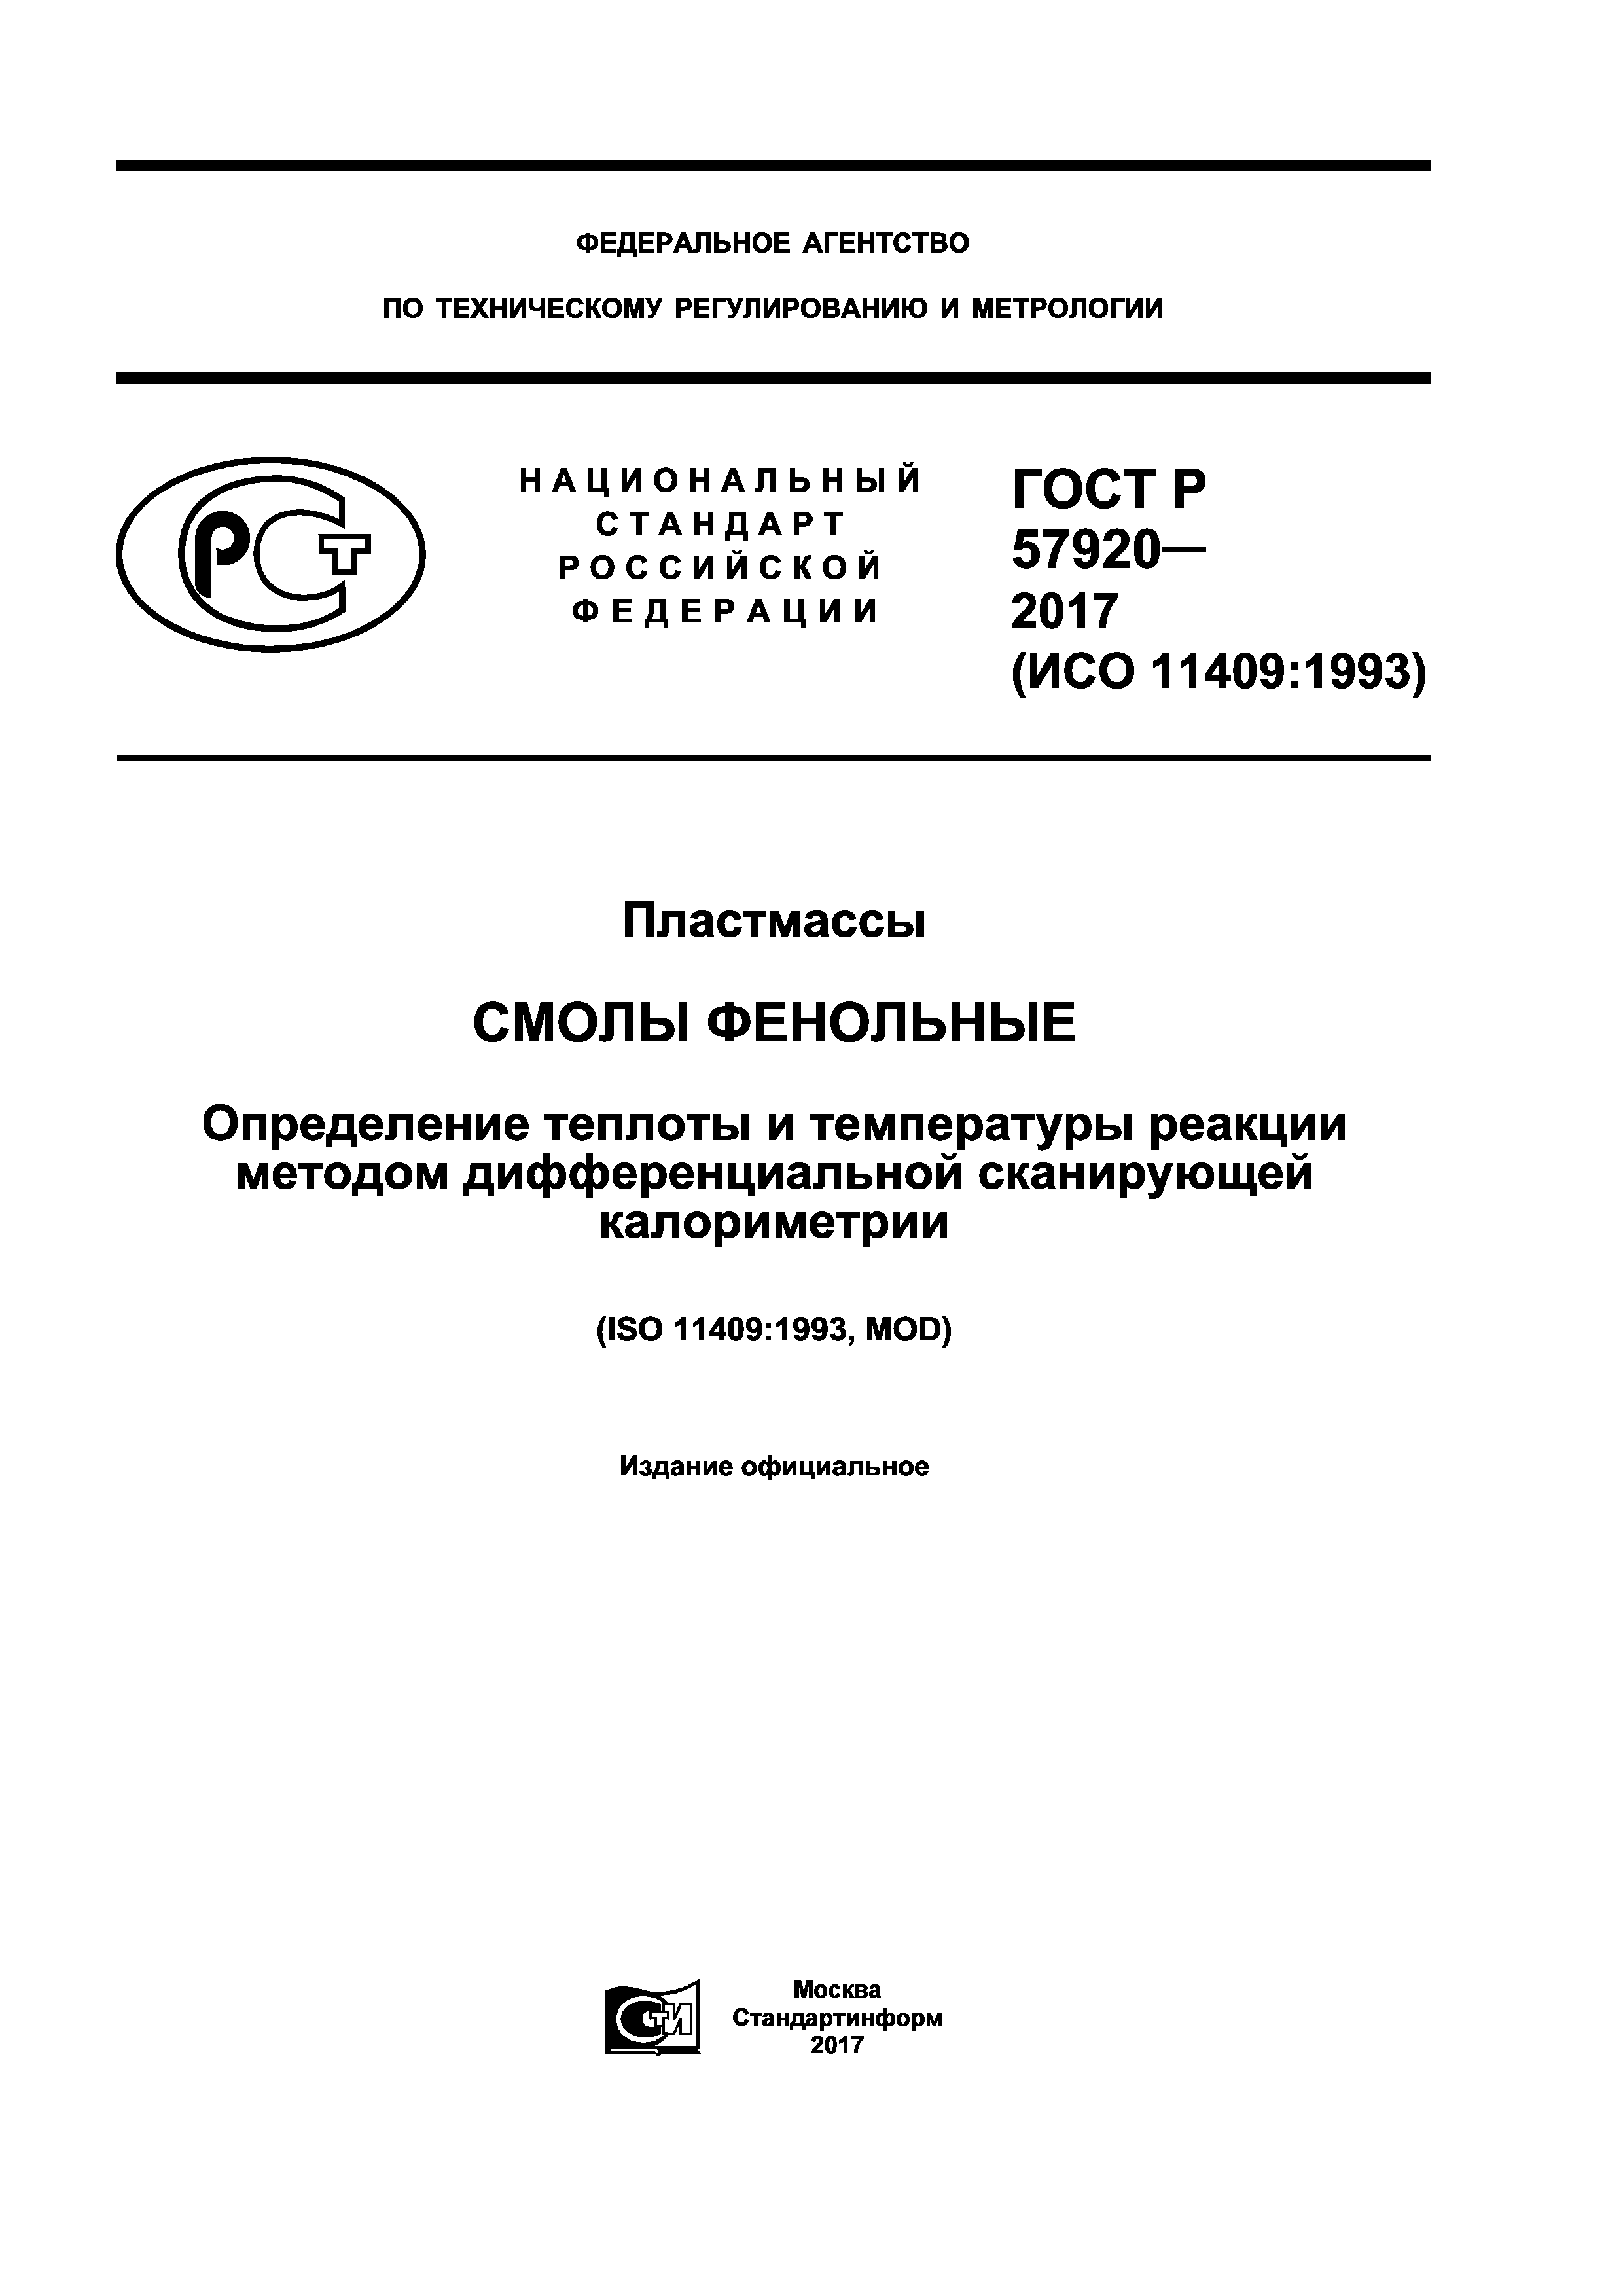 ГОСТ Р 57920-2017